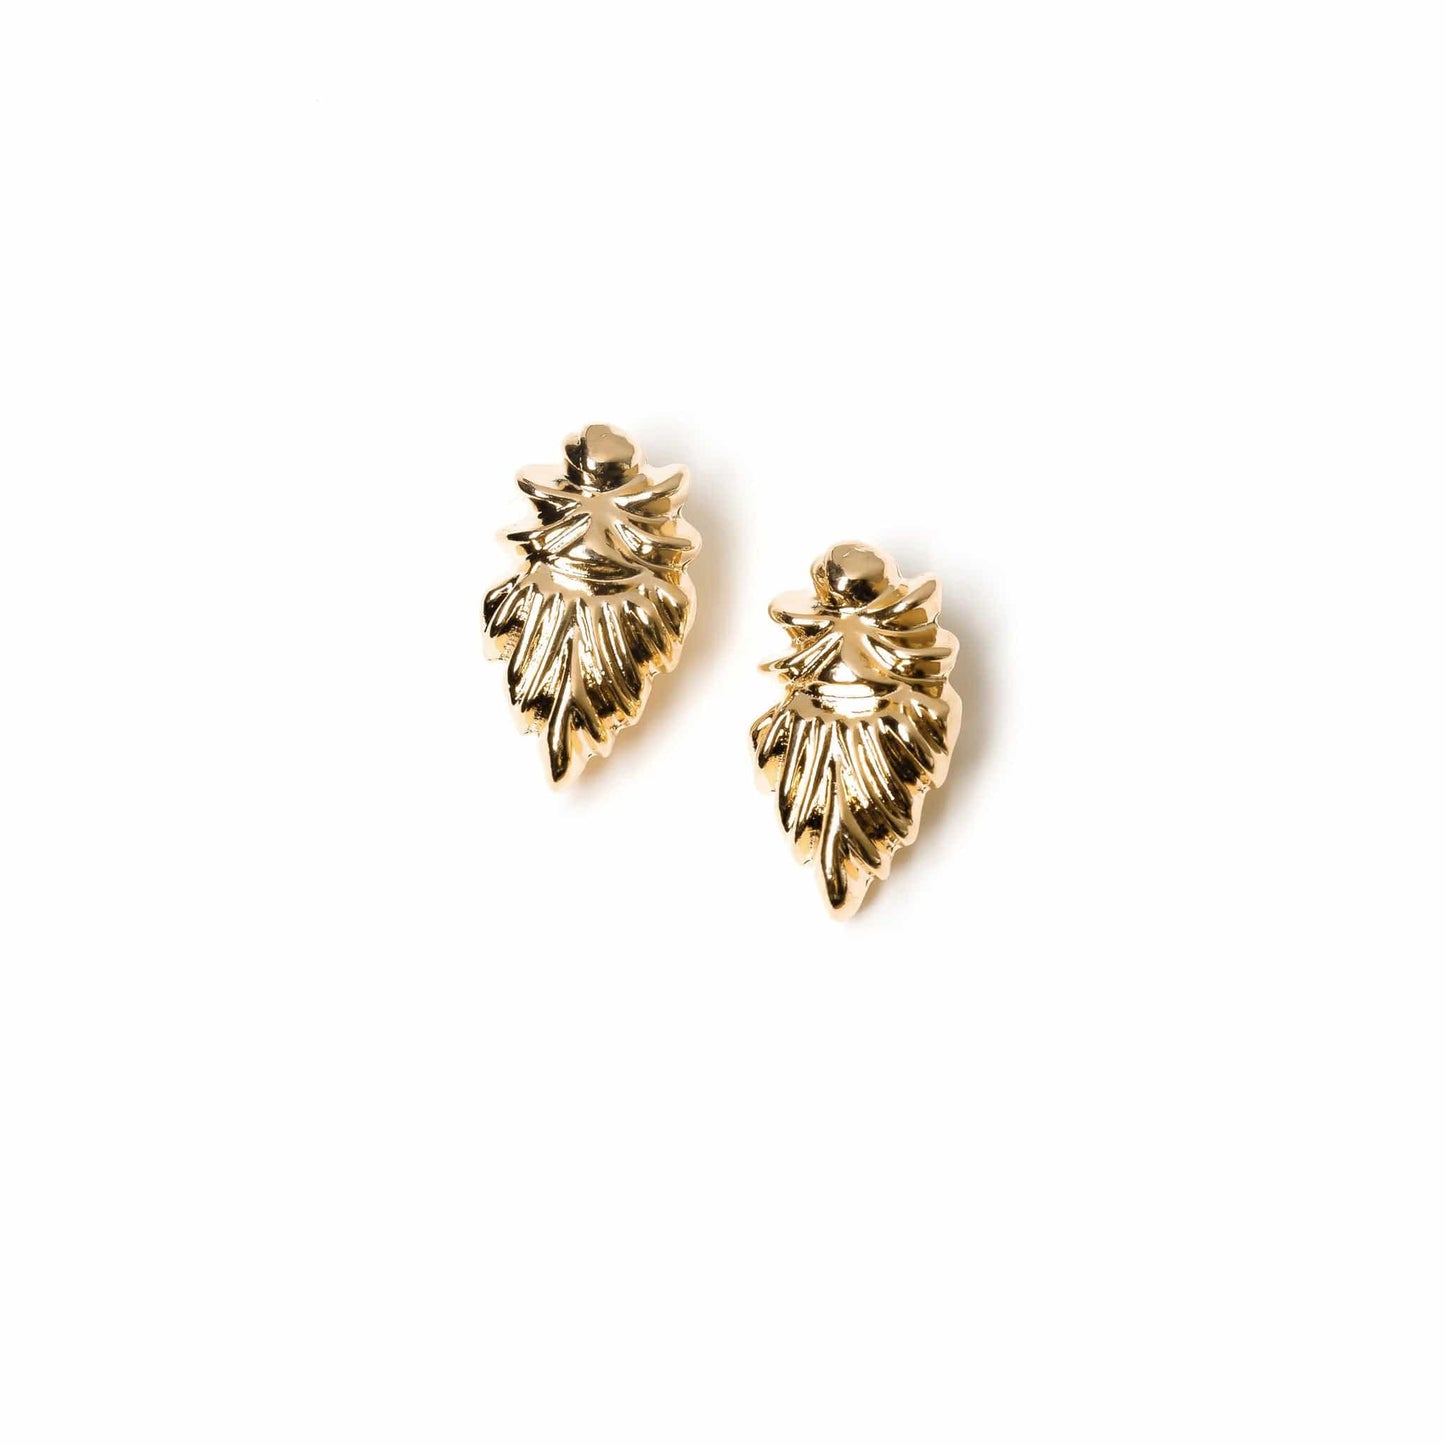 VUE by SEK LLC Earrings gold May earrings